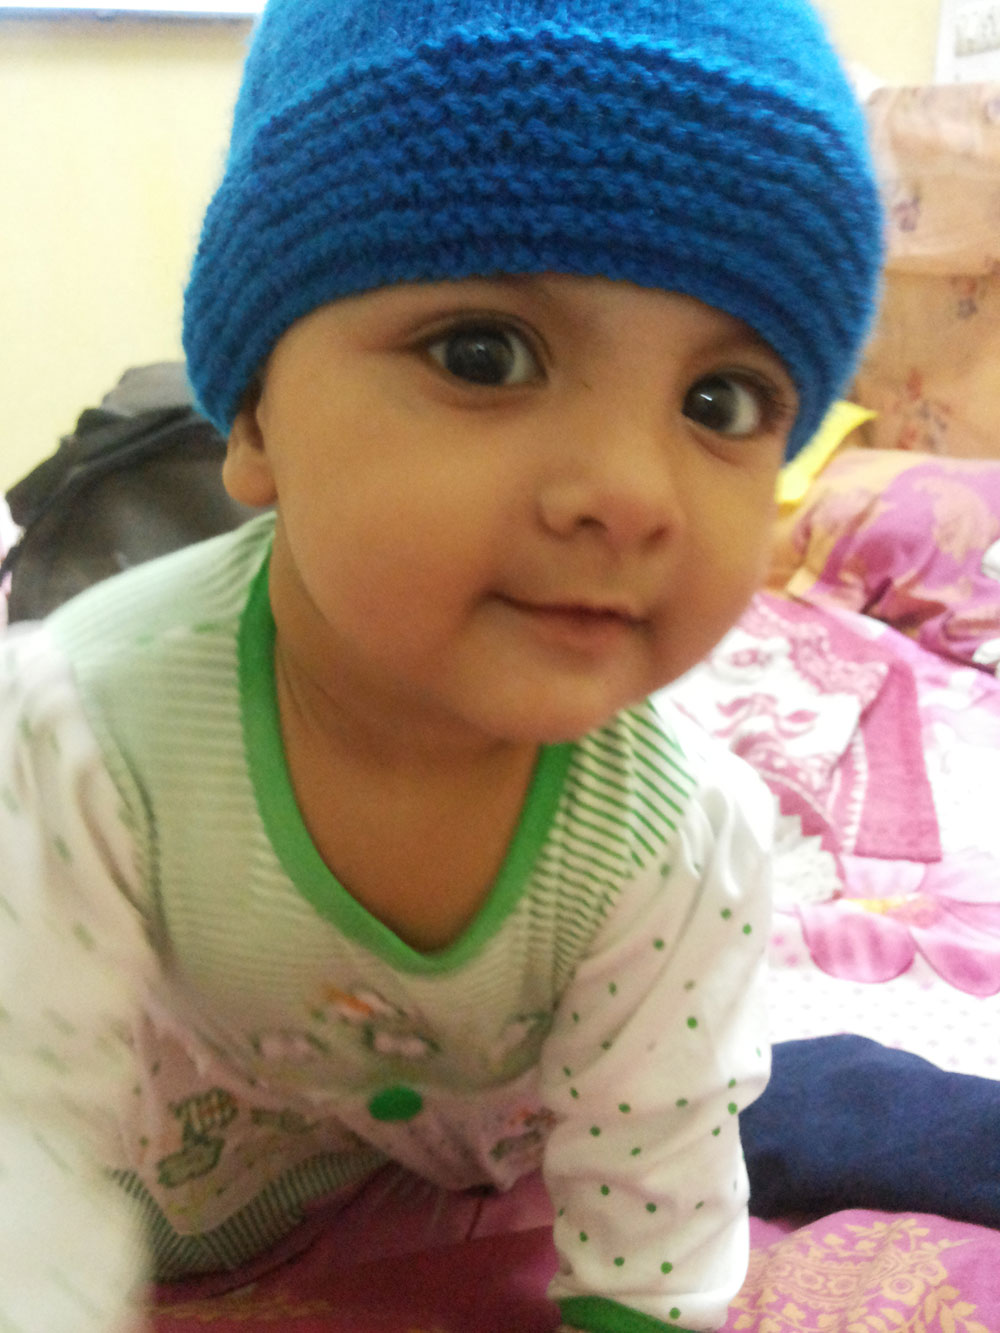 Advika - IndiaParenting.com’s Baby Photo Contest